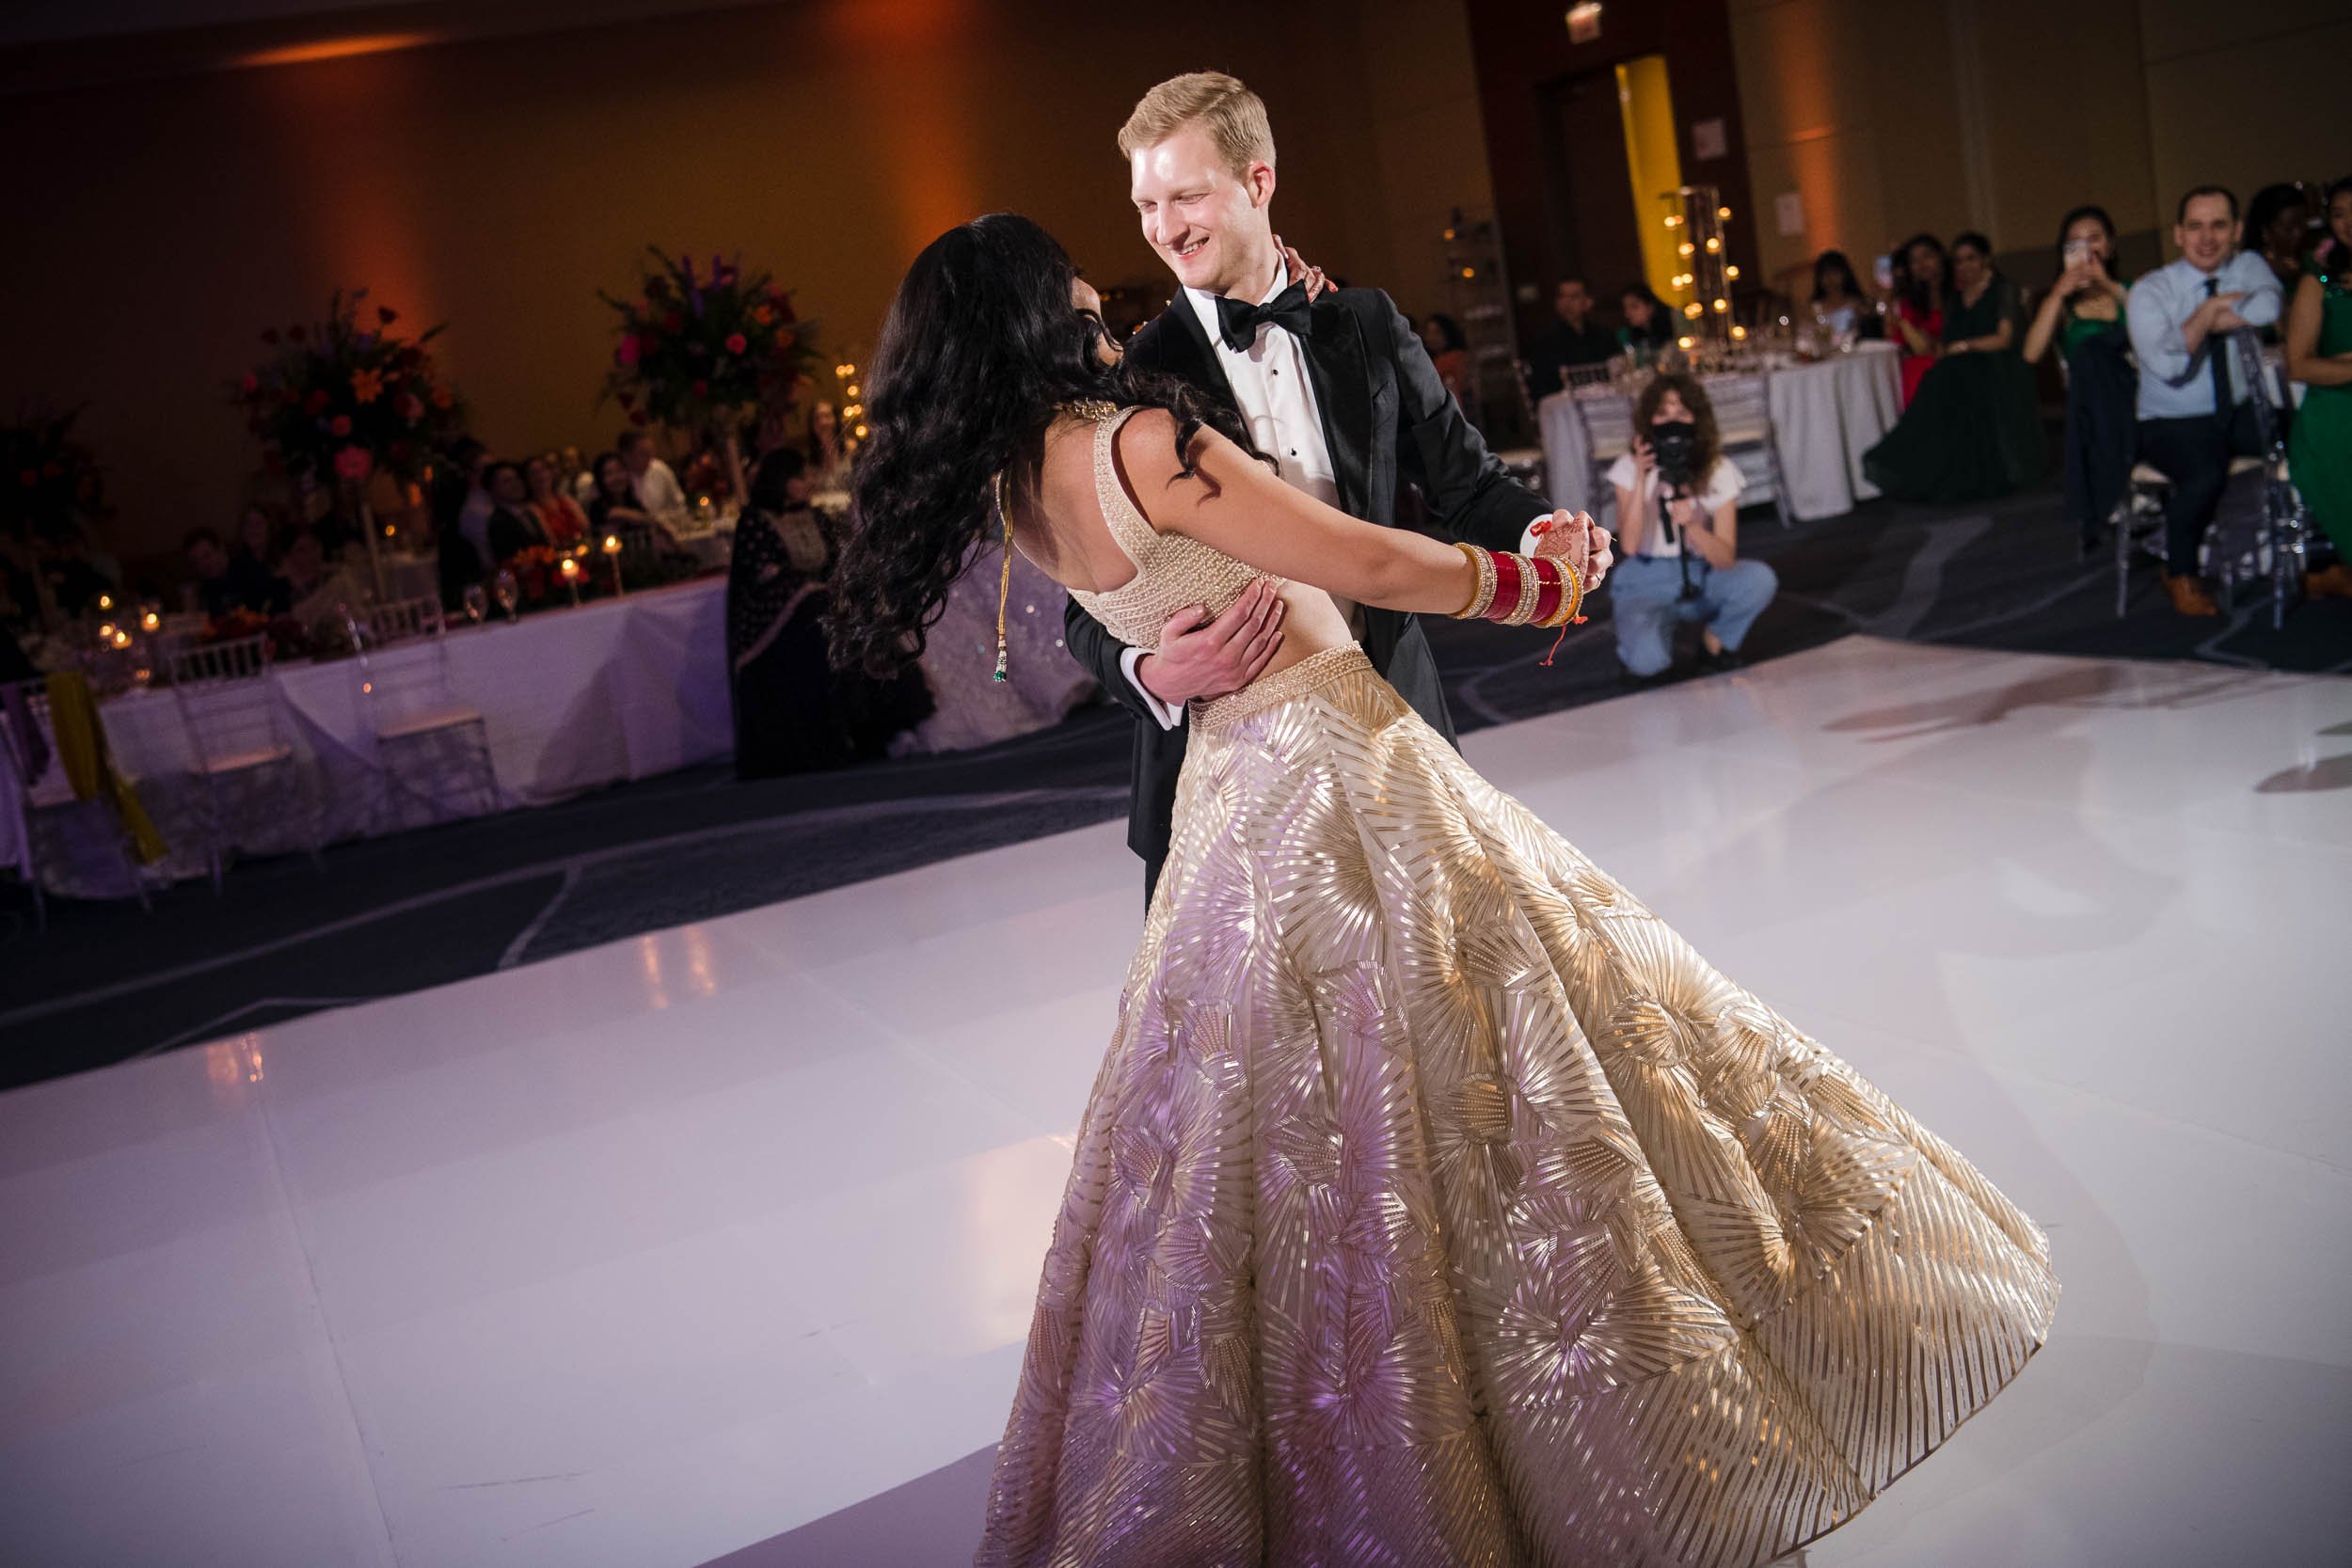 Chicago Wedding Photographer | Renaissance Schaumburg | J. Brown Photography | couple first dance.